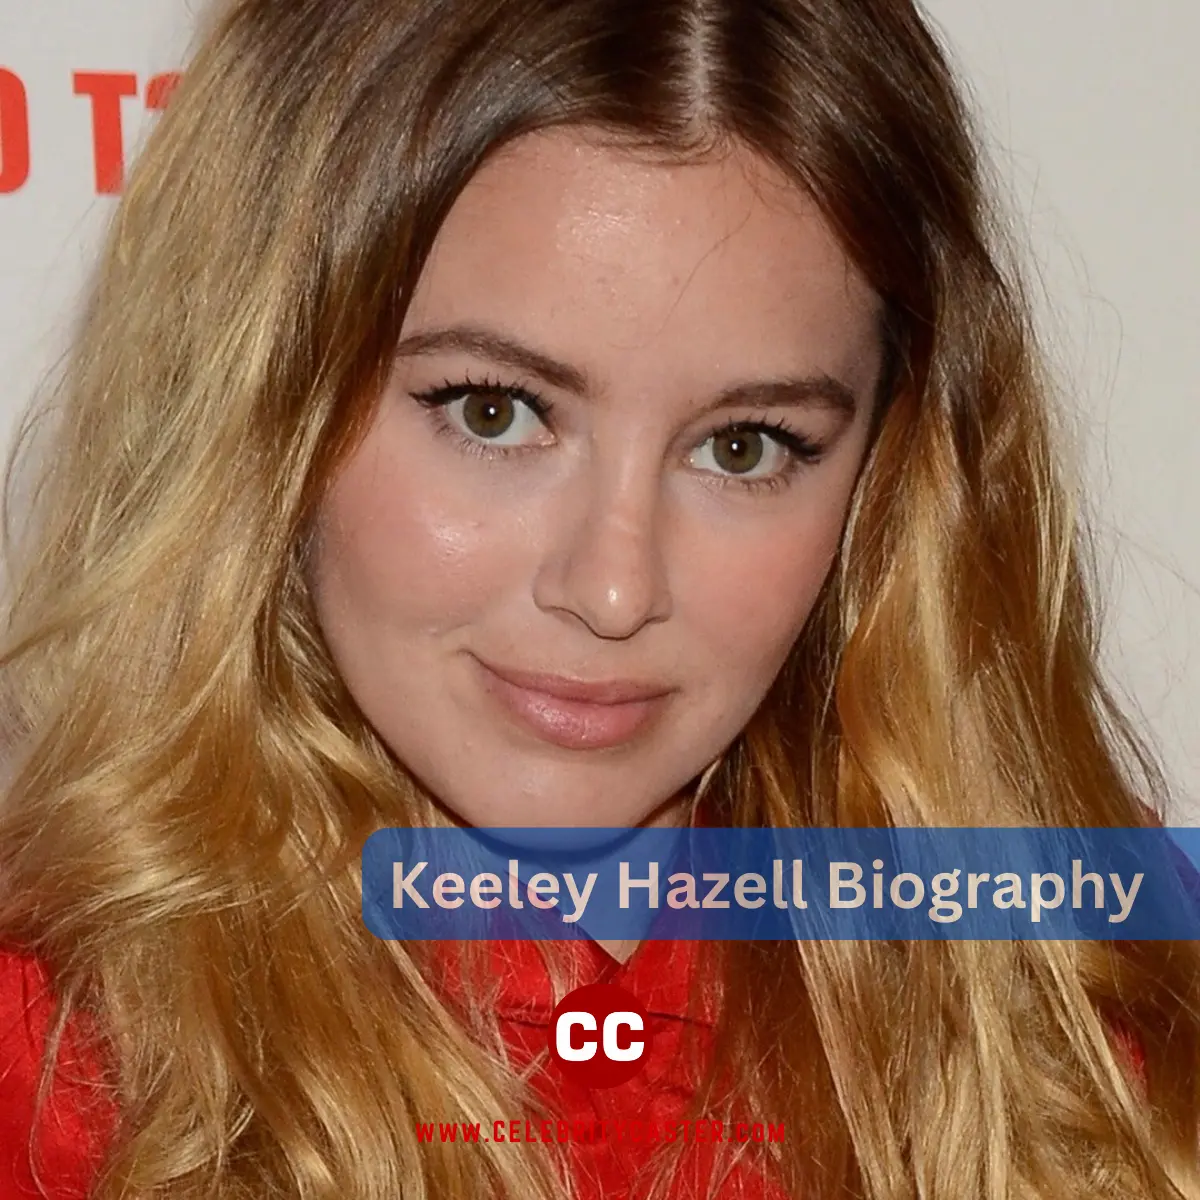 Keeley Hazell Biography